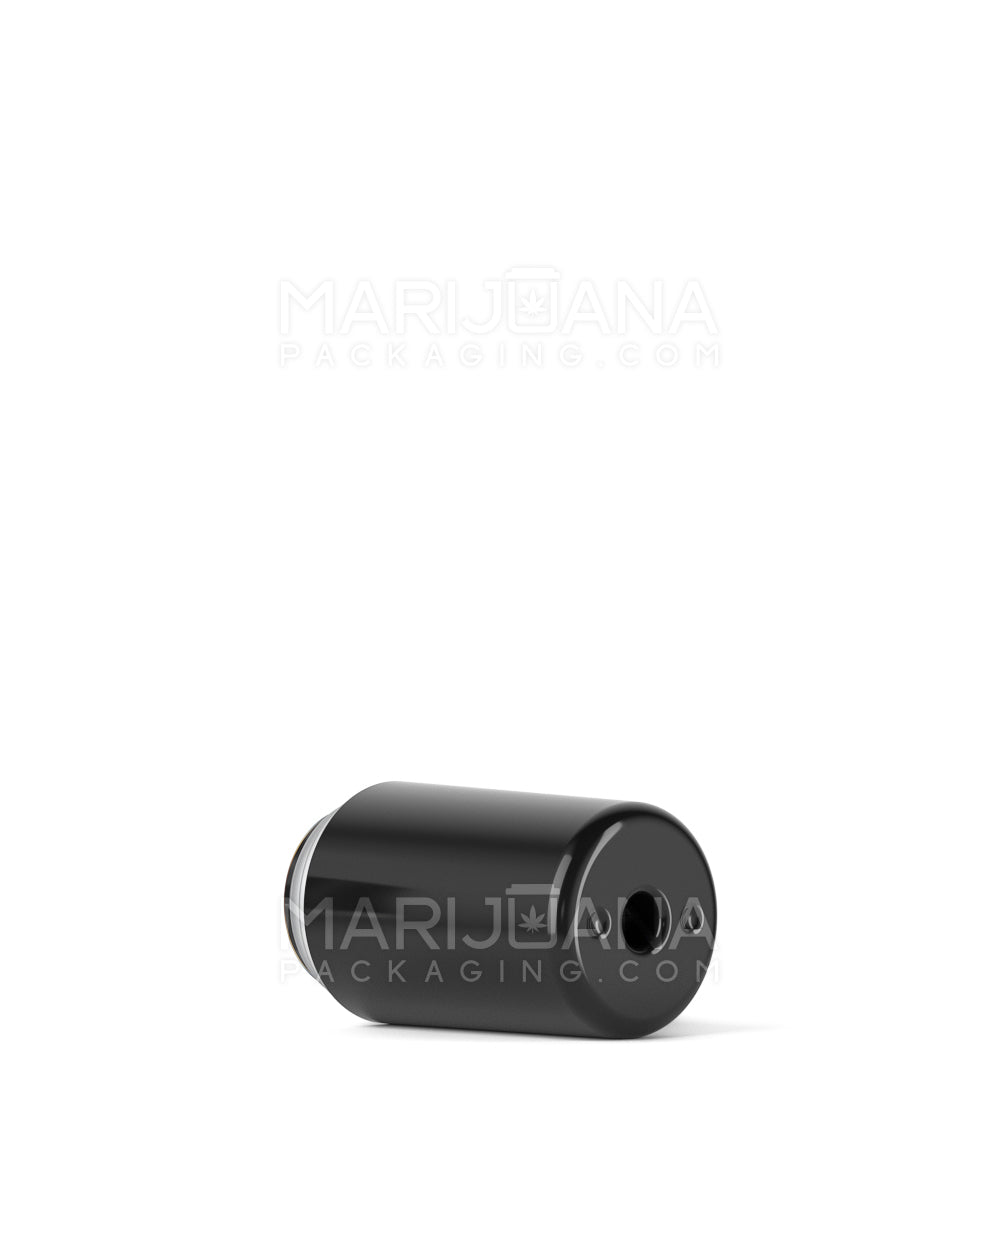 RAE Round Vape Mouthpiece for Hand Press Plastic Cartridges | Black Plastic - Hand Press | Sample - 5